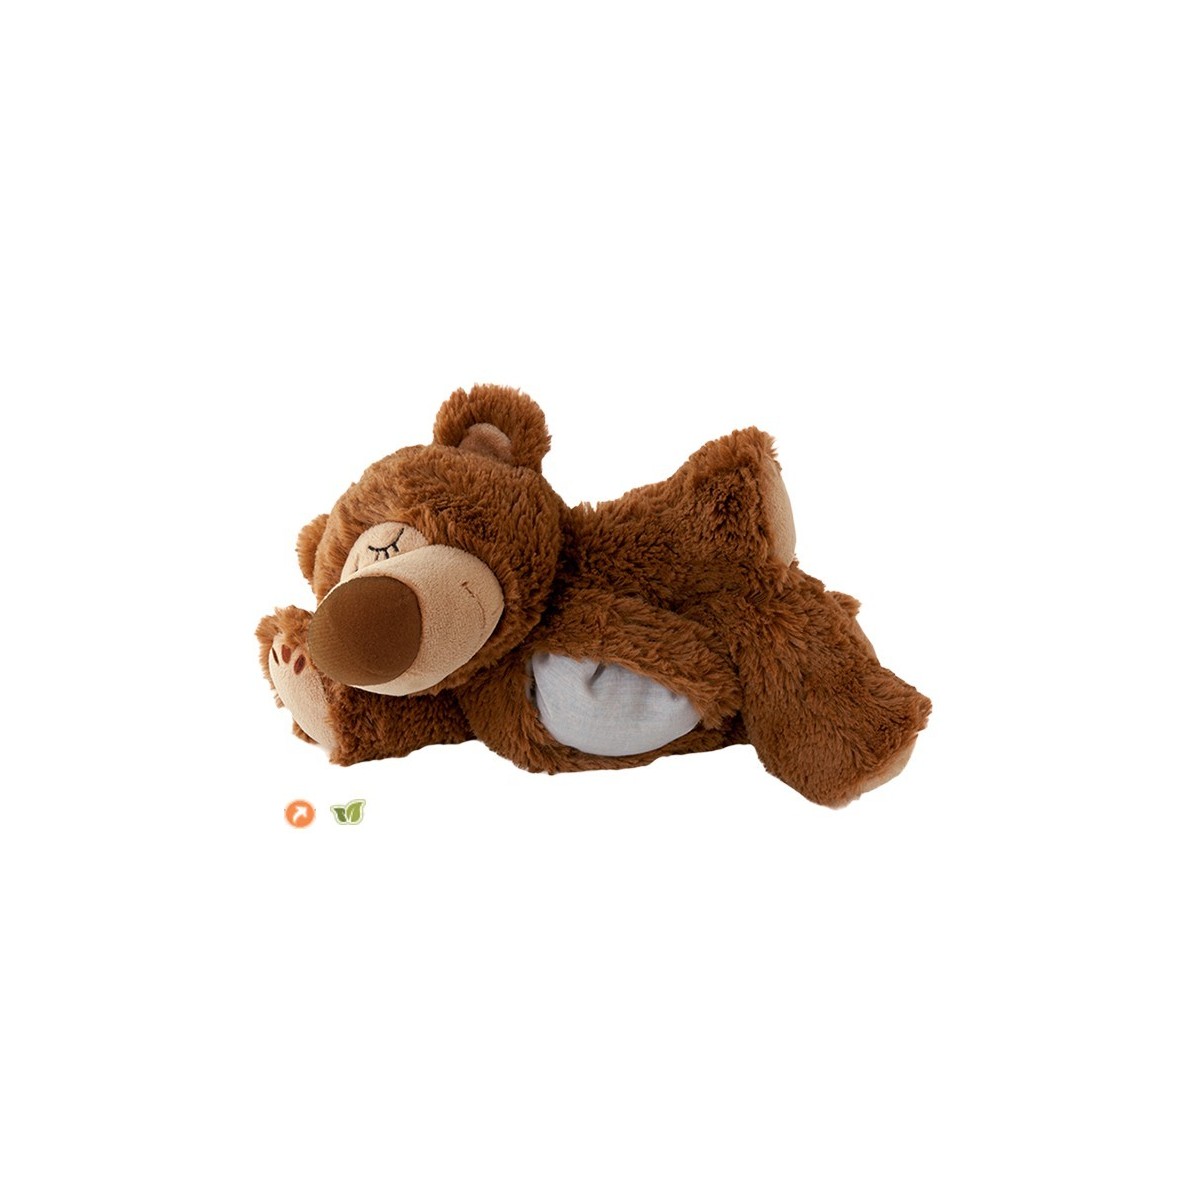 L'ours dormant brun